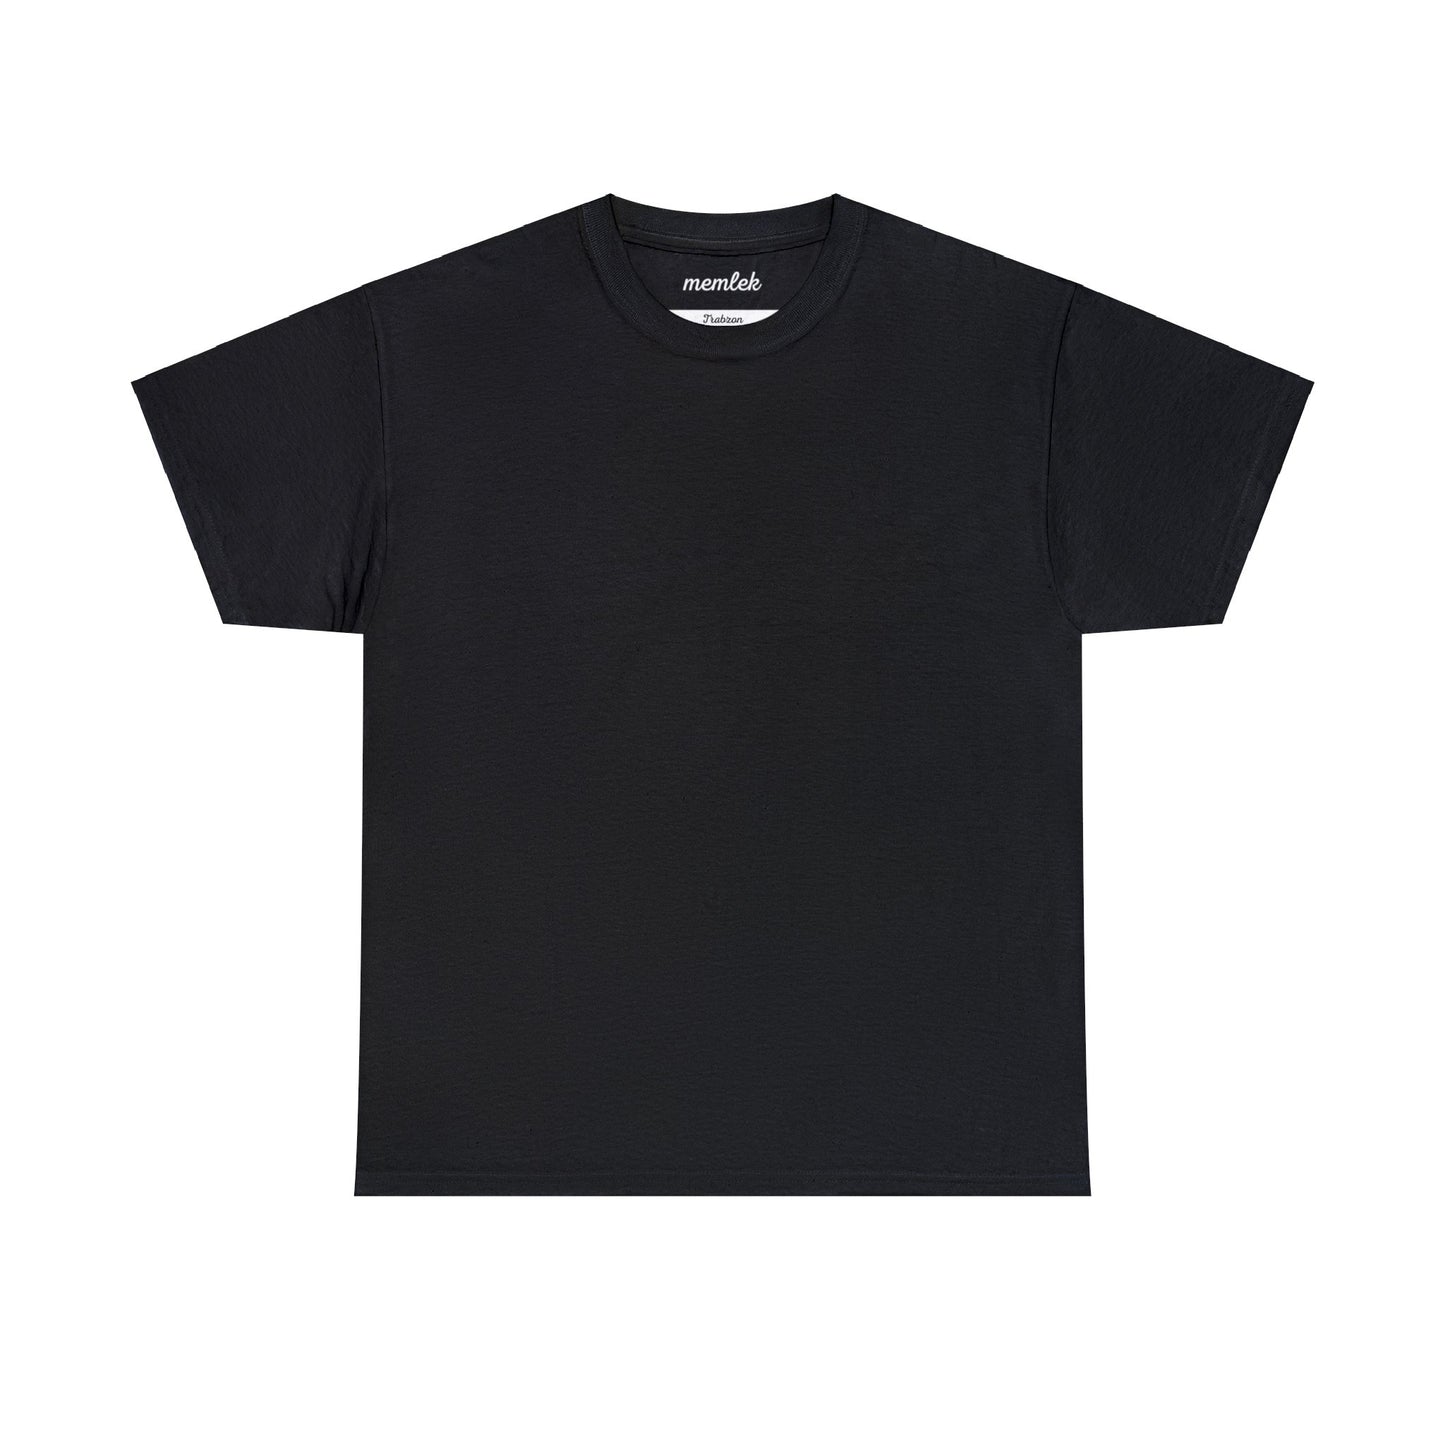 Kurt - 61 Trabzon - T-Shirt - Back Print - Black/White